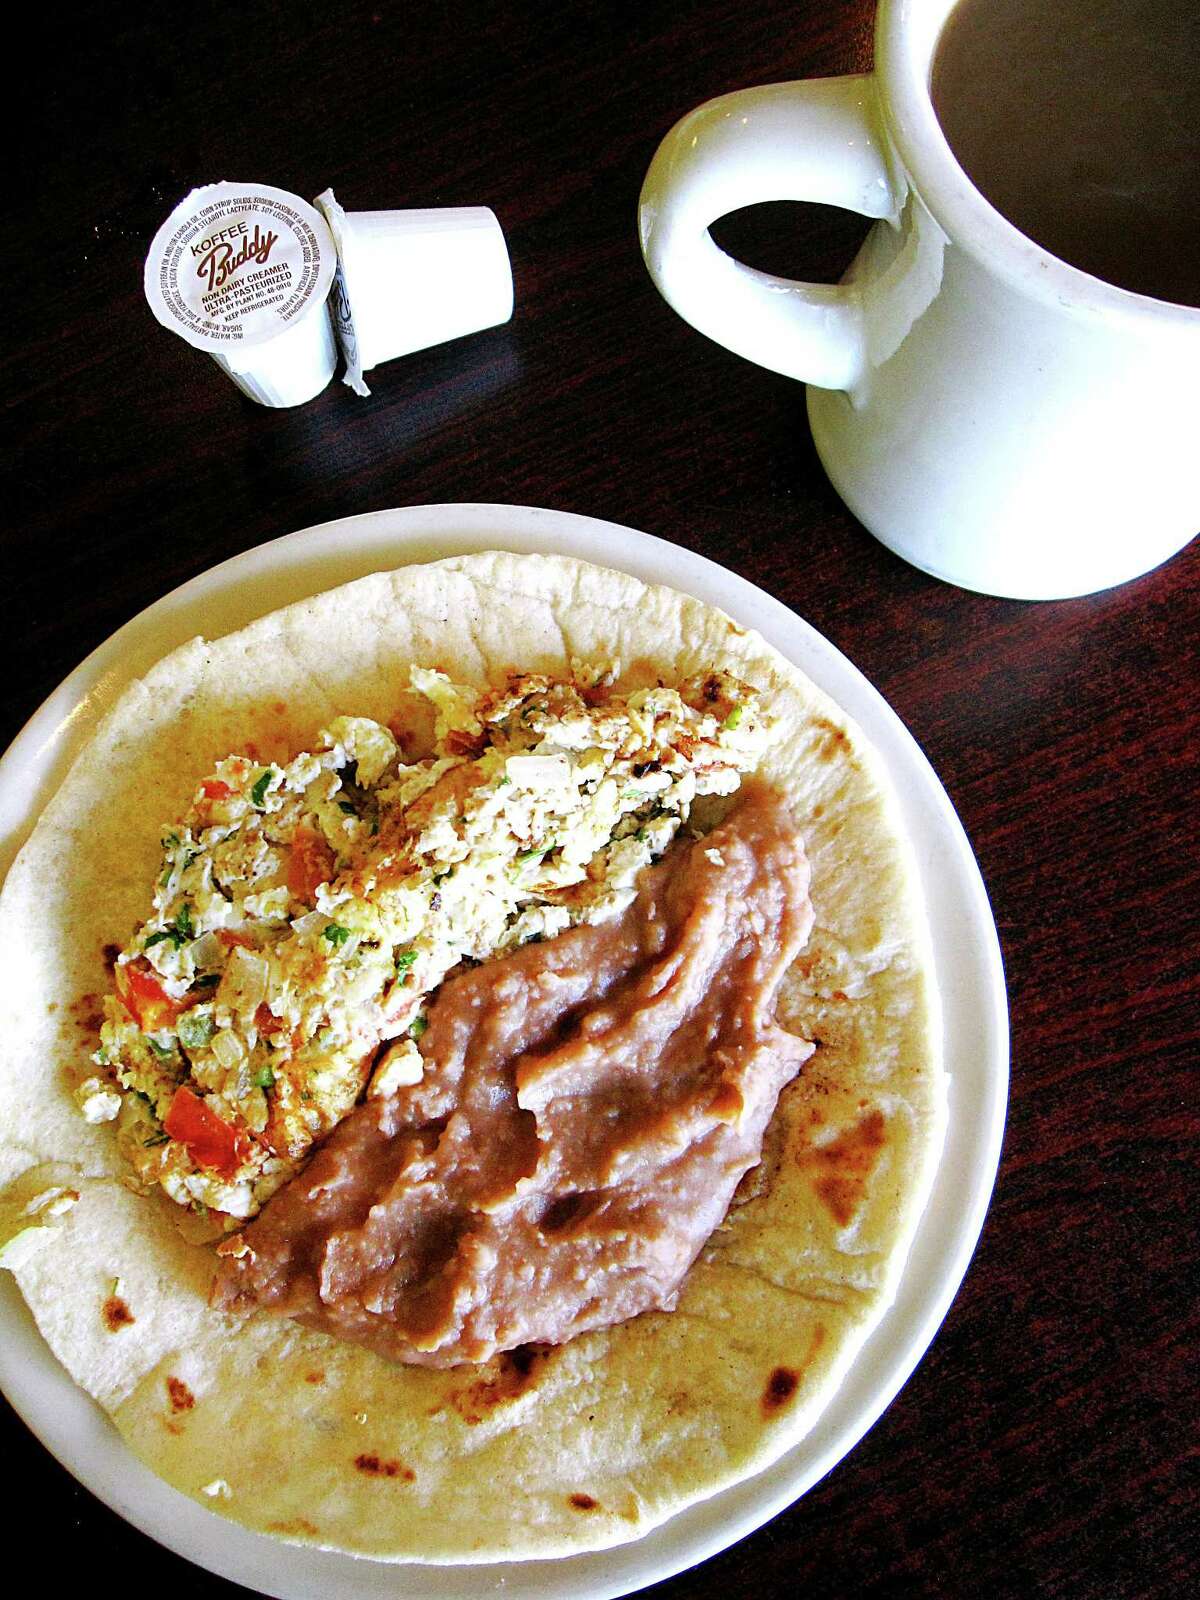 Huevos a la mexicana taco with beans on a handmade flour tortilla and a hot cup of cafe de olla with cinnamon and brown sugar from Las Sabrosas de Guanajuato.